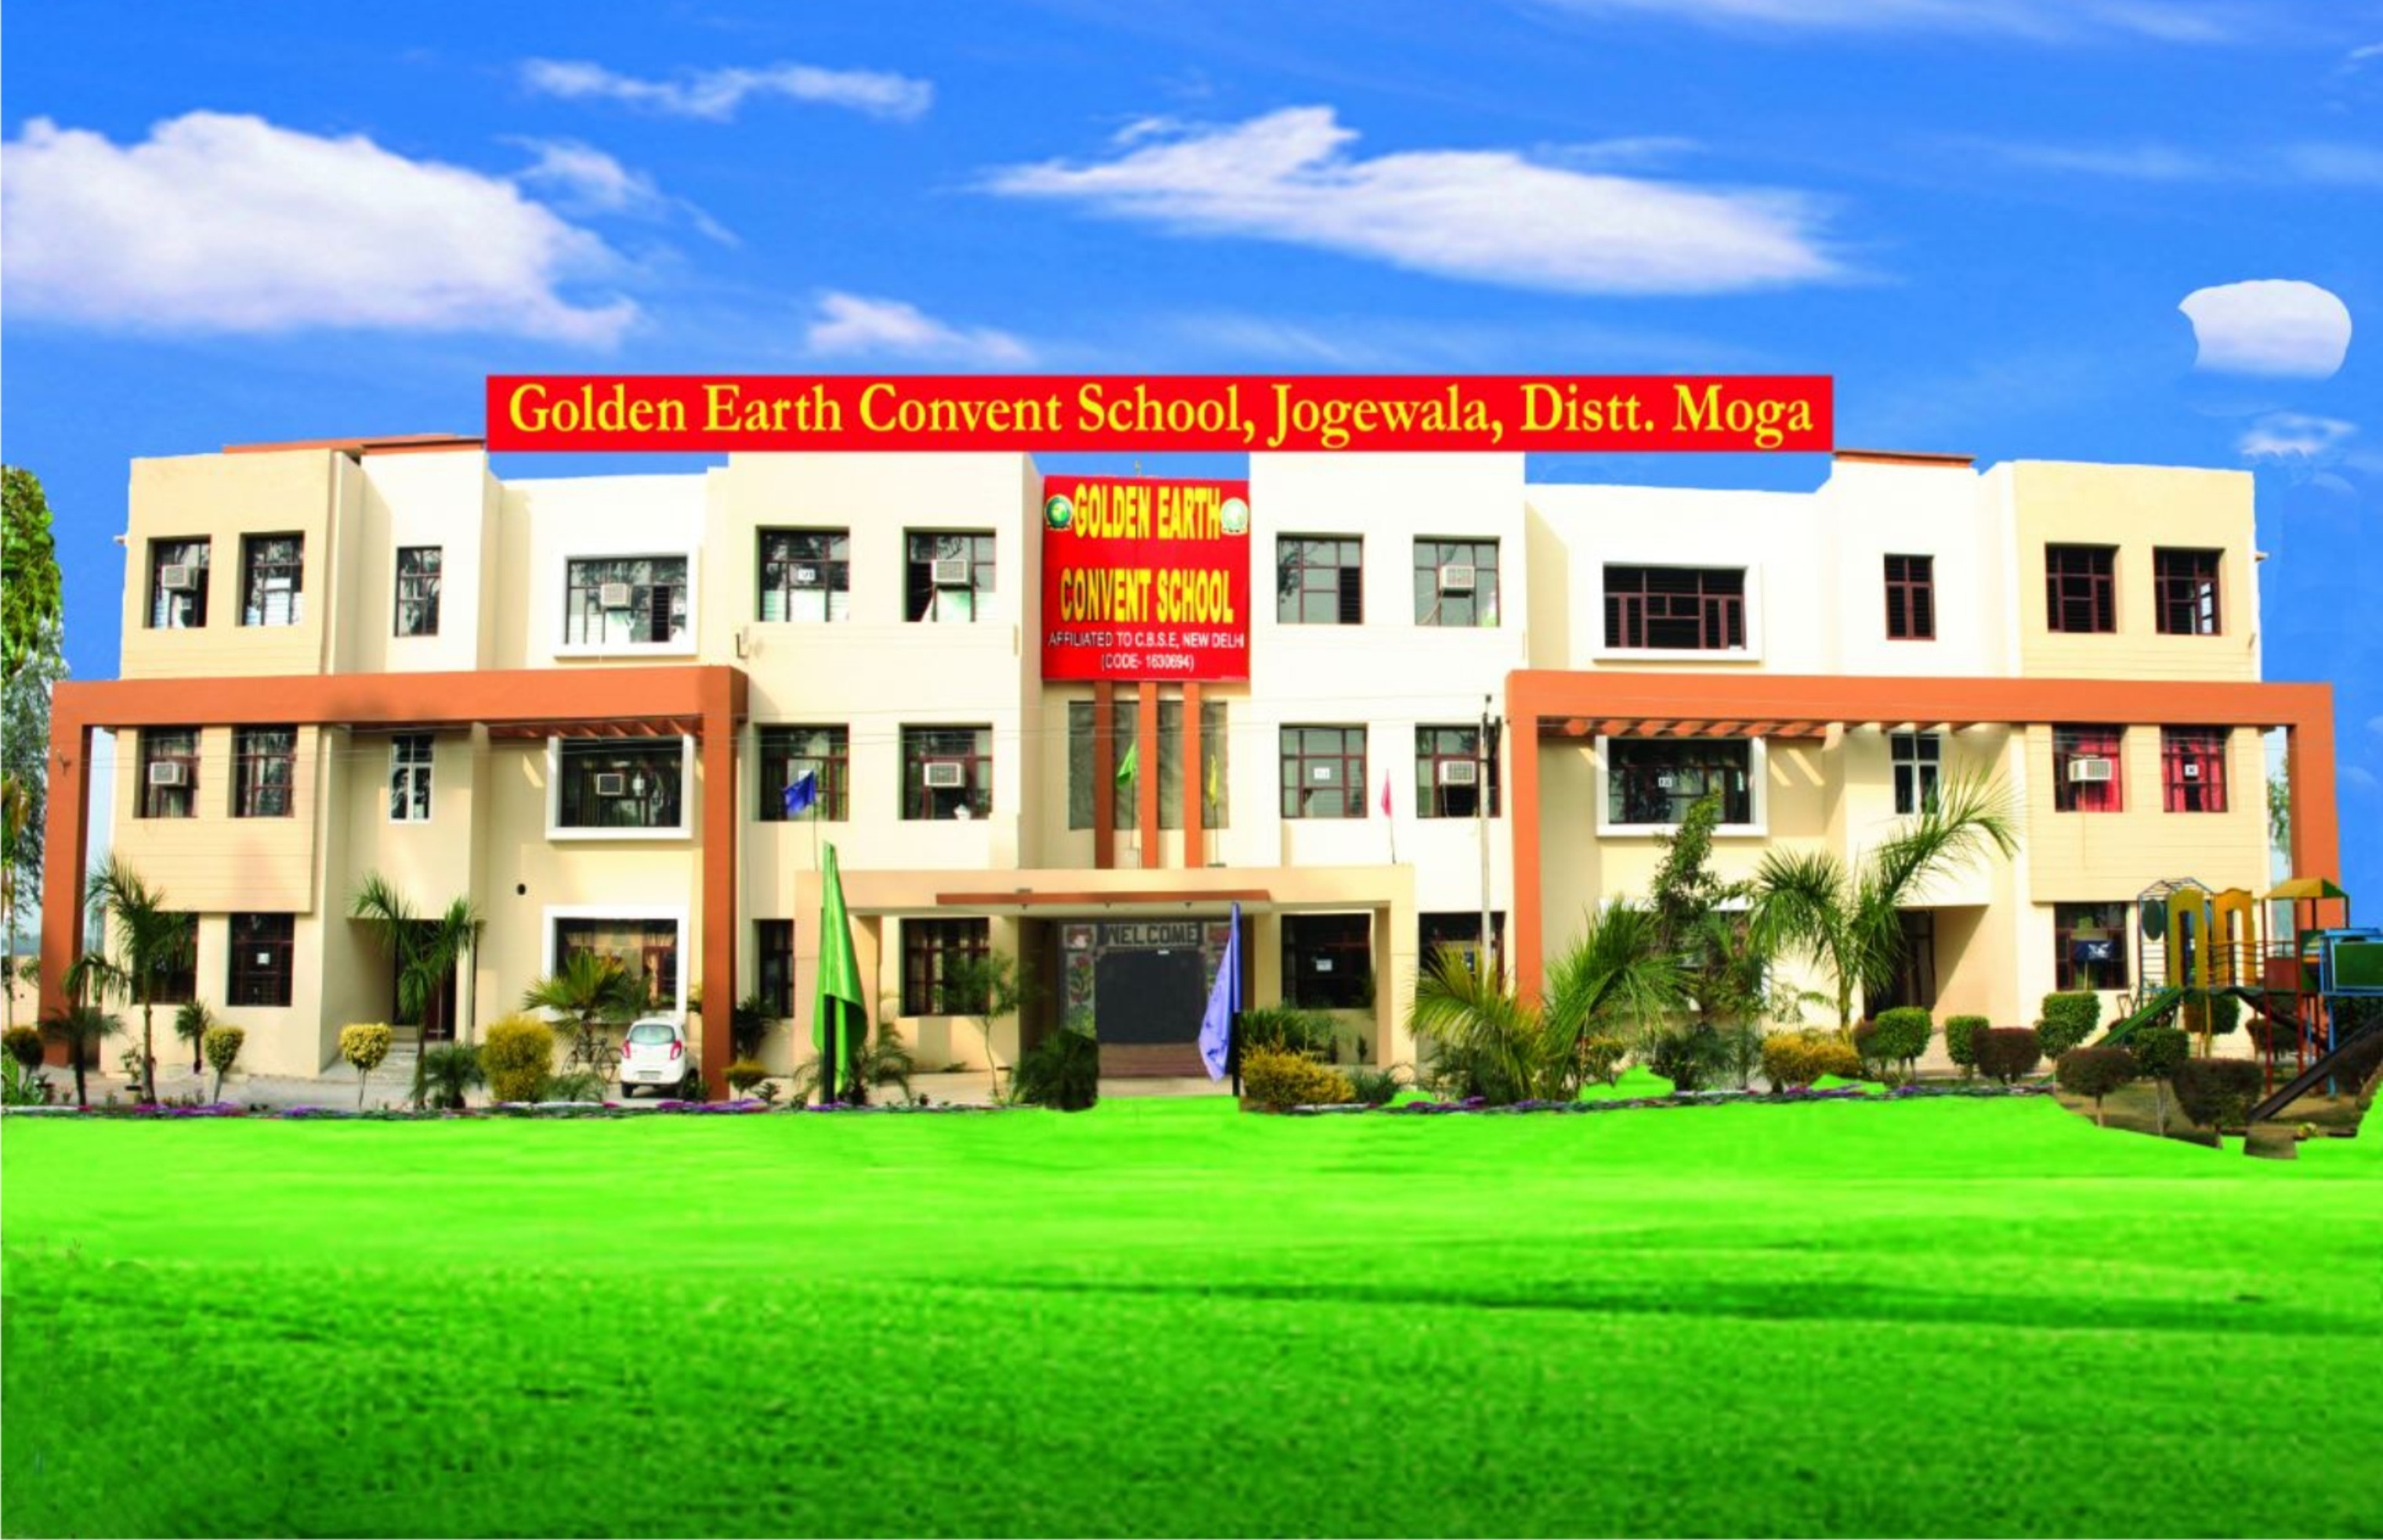 Golden Earth Convent School